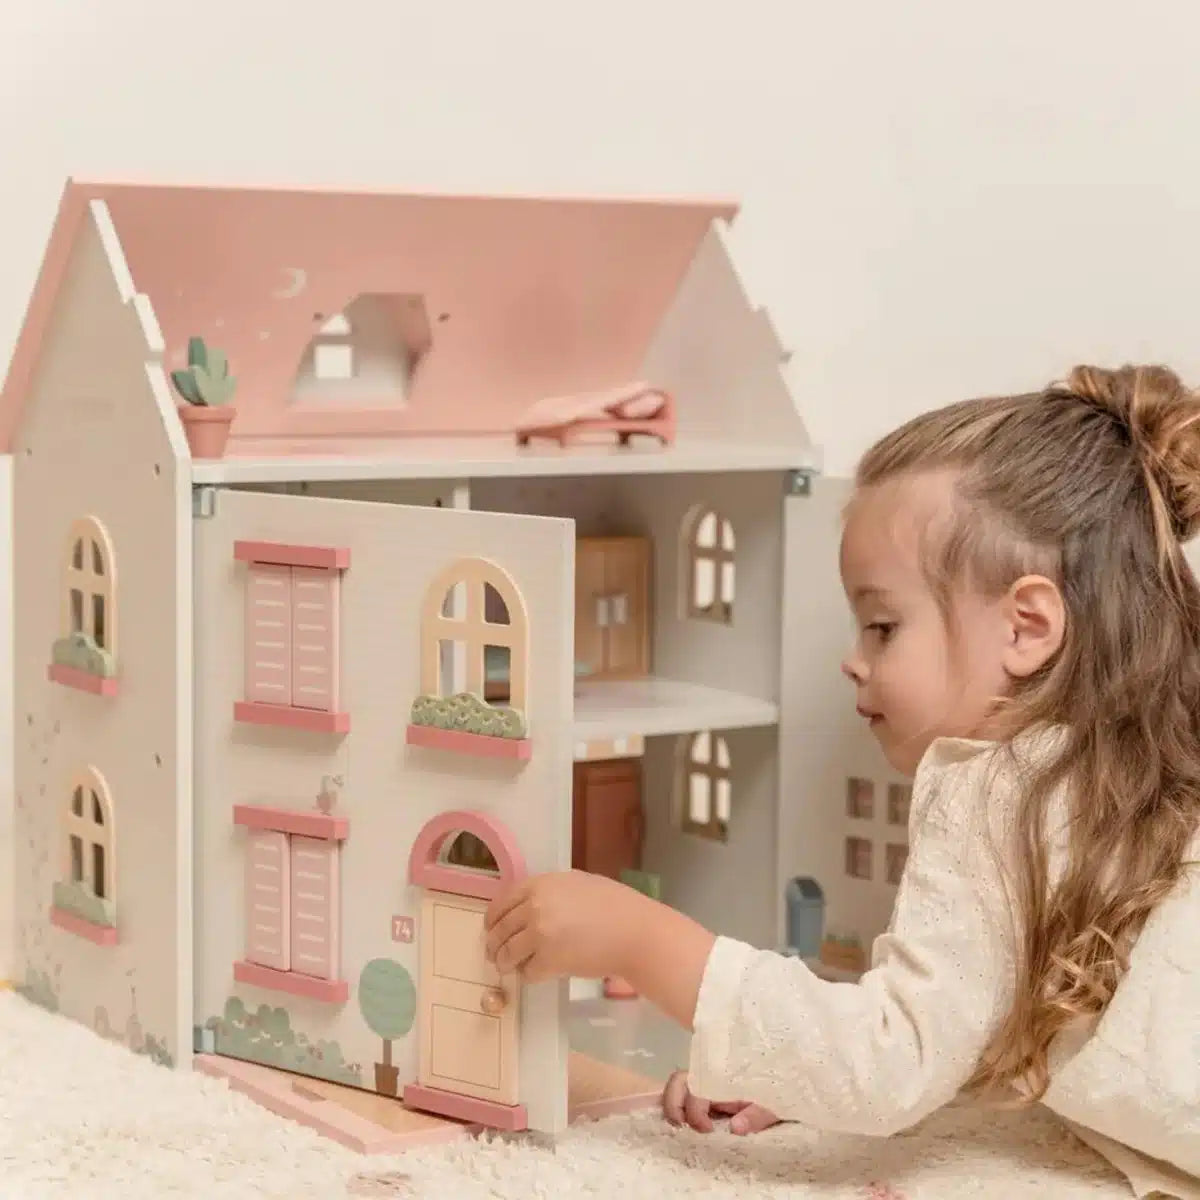 Casa de Bonecas de madeira rosa | Little Dutch - Mini-Me